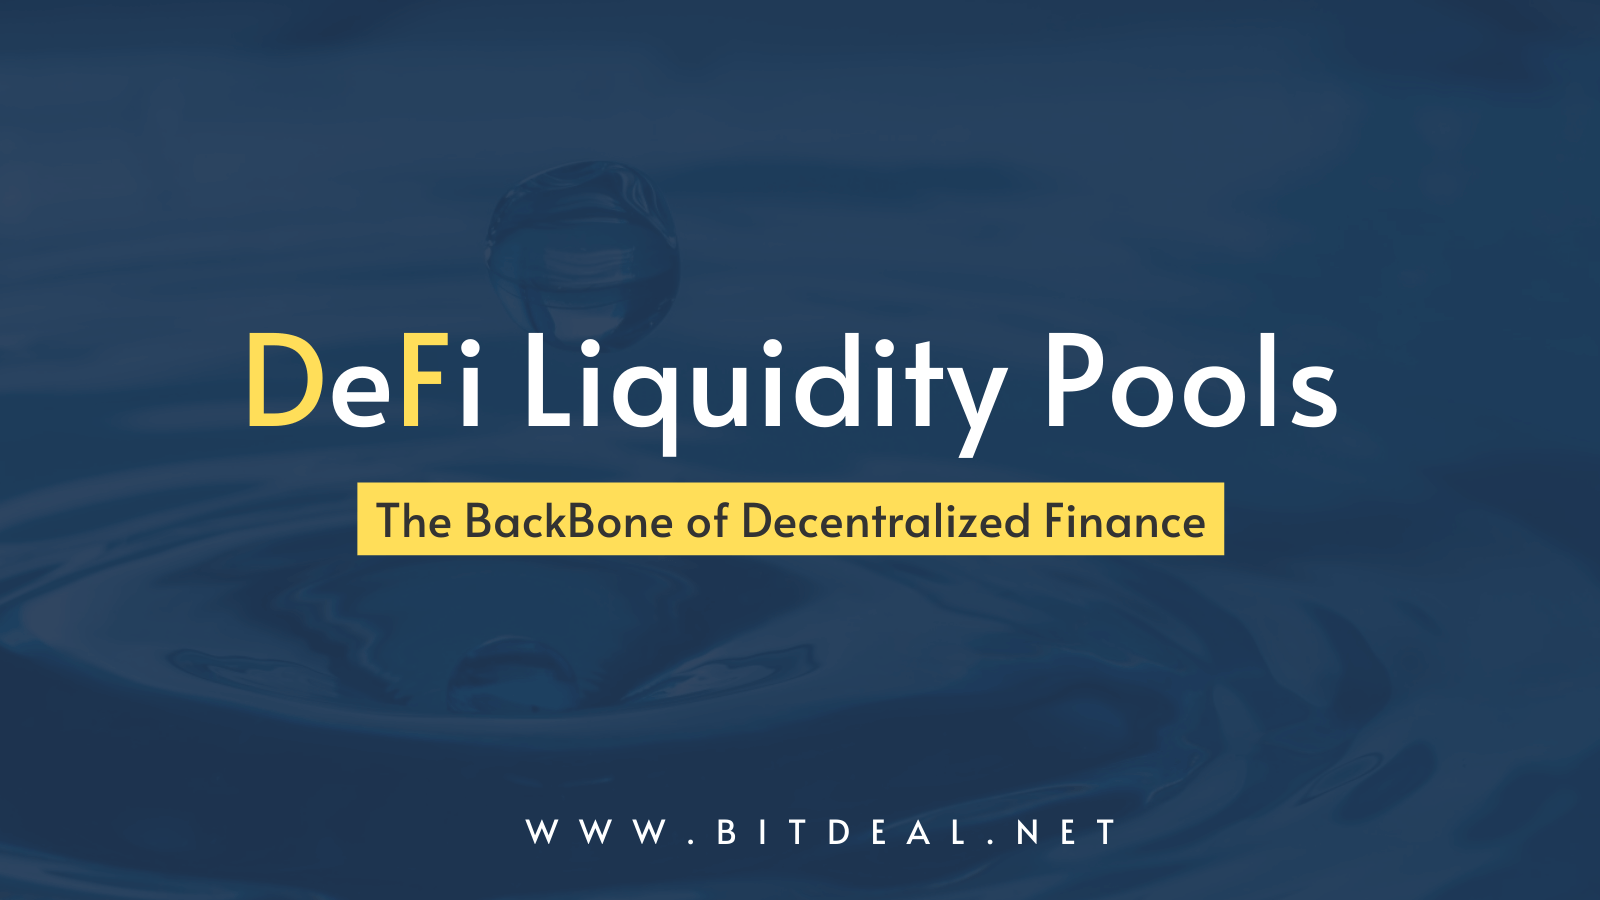 DeFi Liquidity Pools - The Backbone of Decentralized Finance